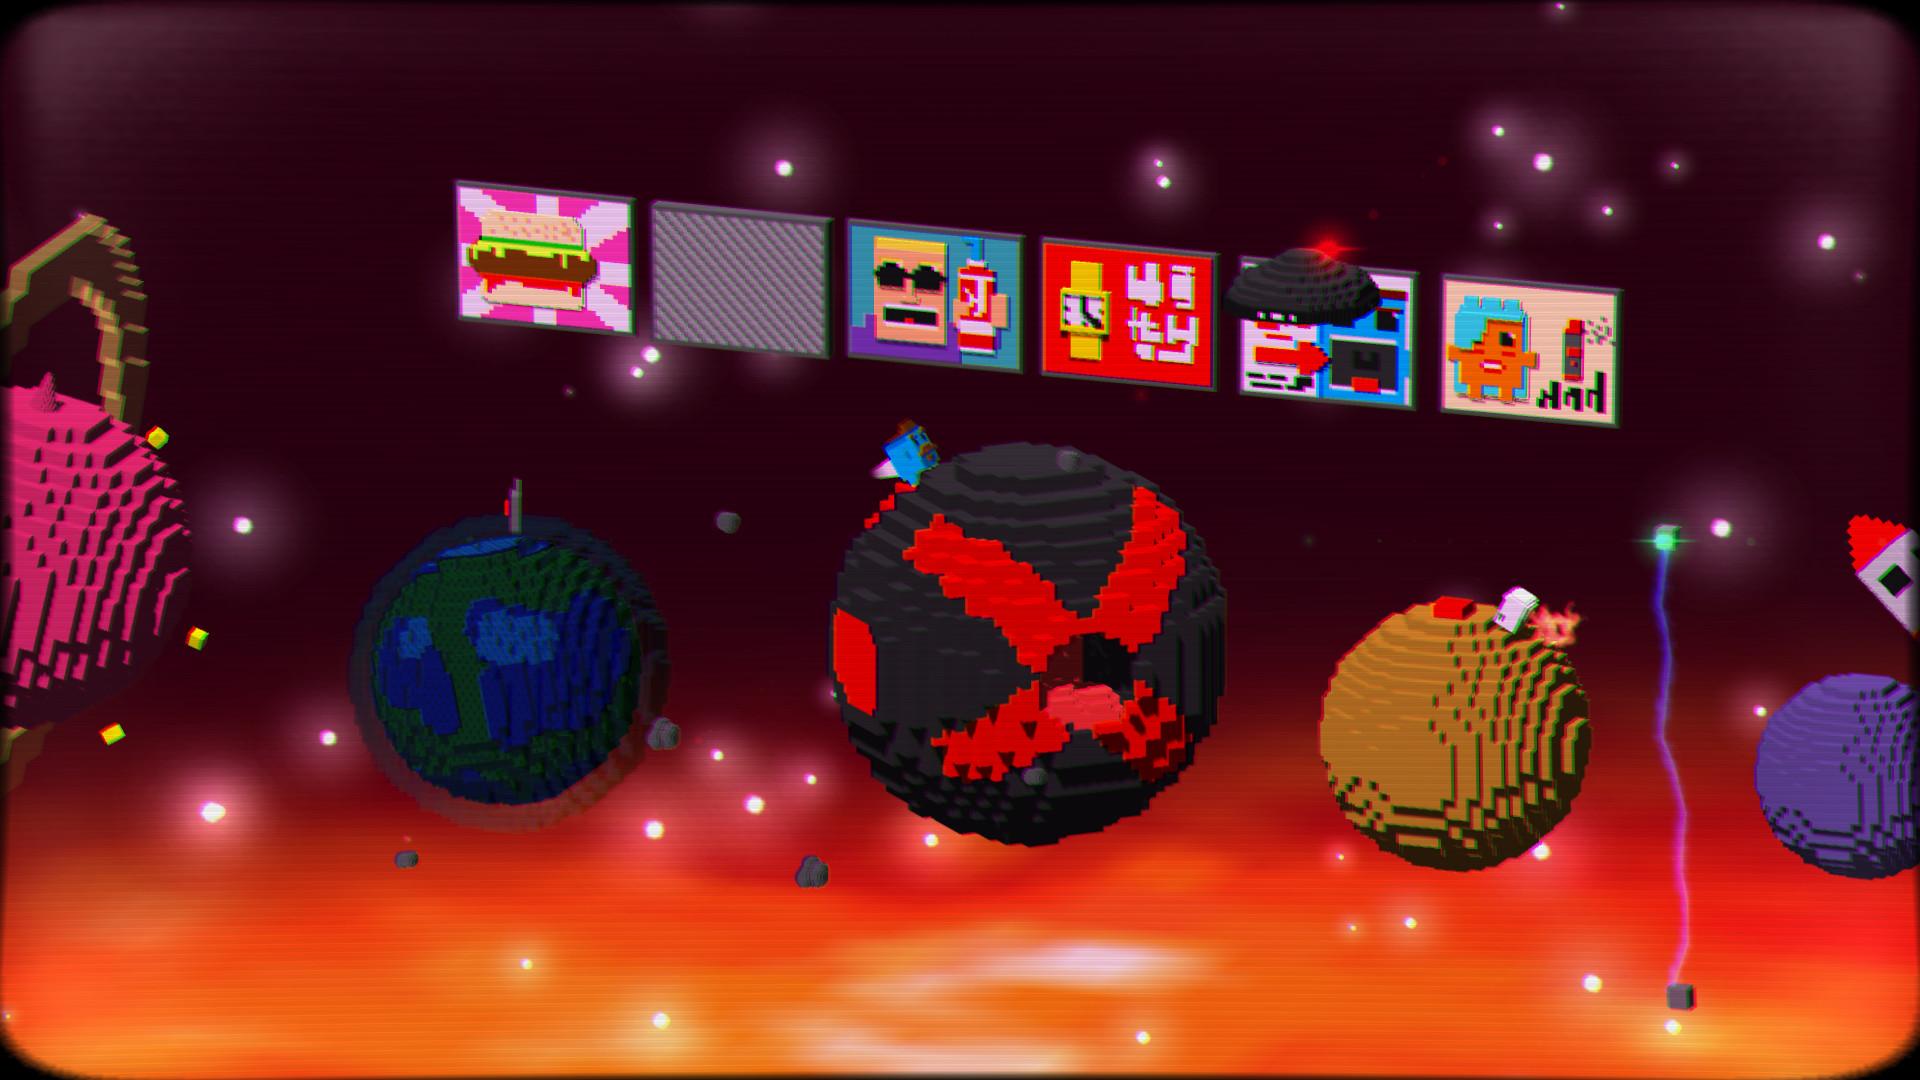 Screenshot №2 from game Cosmic Leap